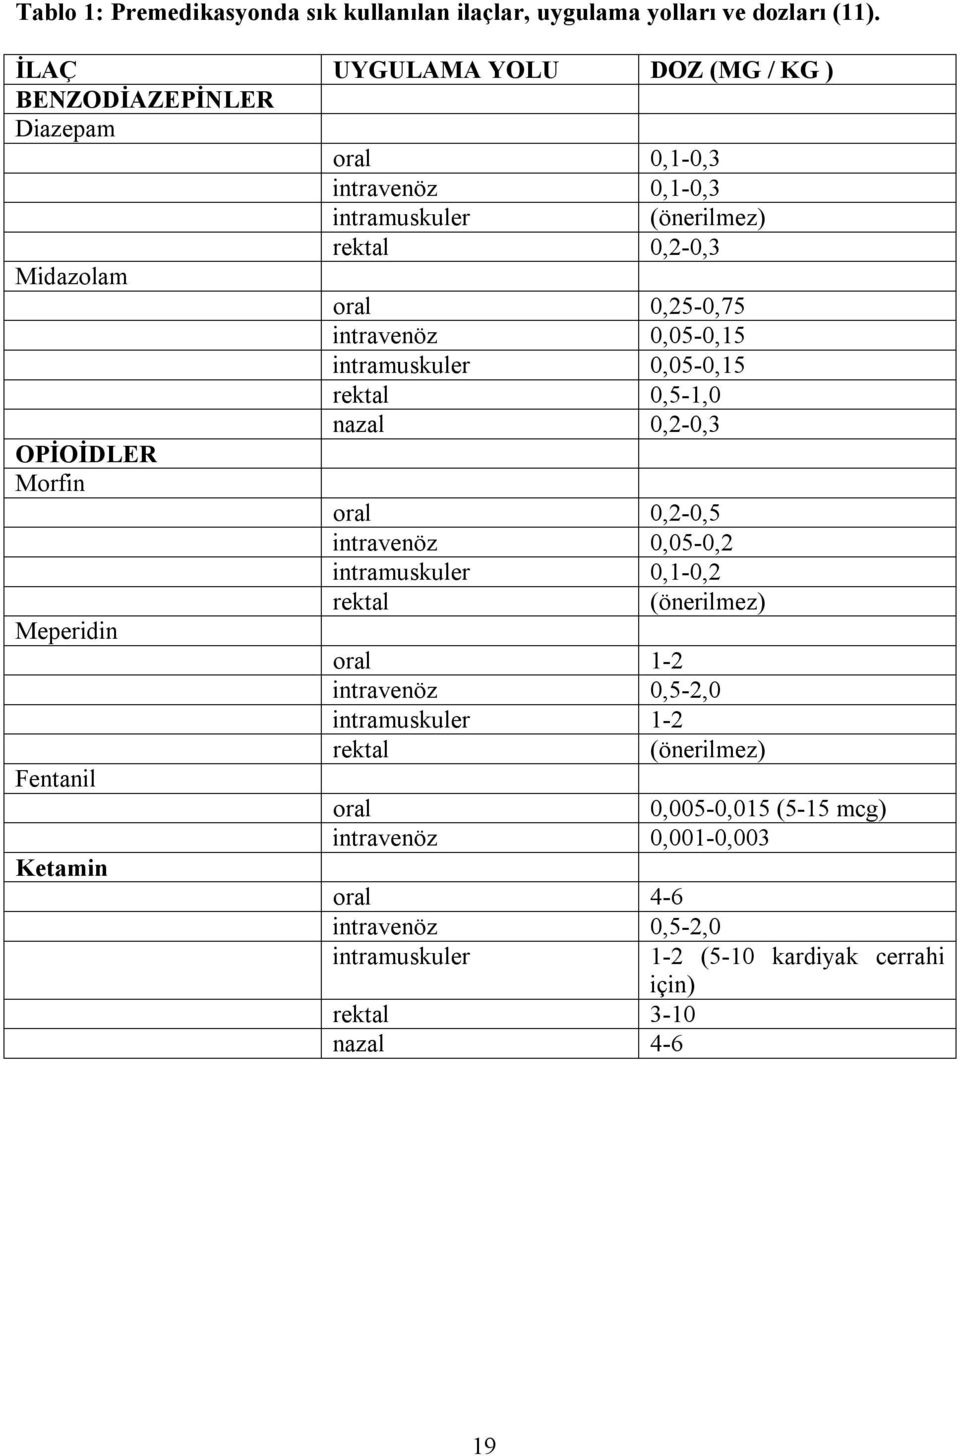 Meperidin Fentanil Ketamin oral 0,25-0,75 intravenöz 0,05-0,15 intramuskuler 0,05-0,15 rektal 0,5-1,0 nazal 0,2-0,3 oral 0,2-0,5 intravenöz 0,05-0,2